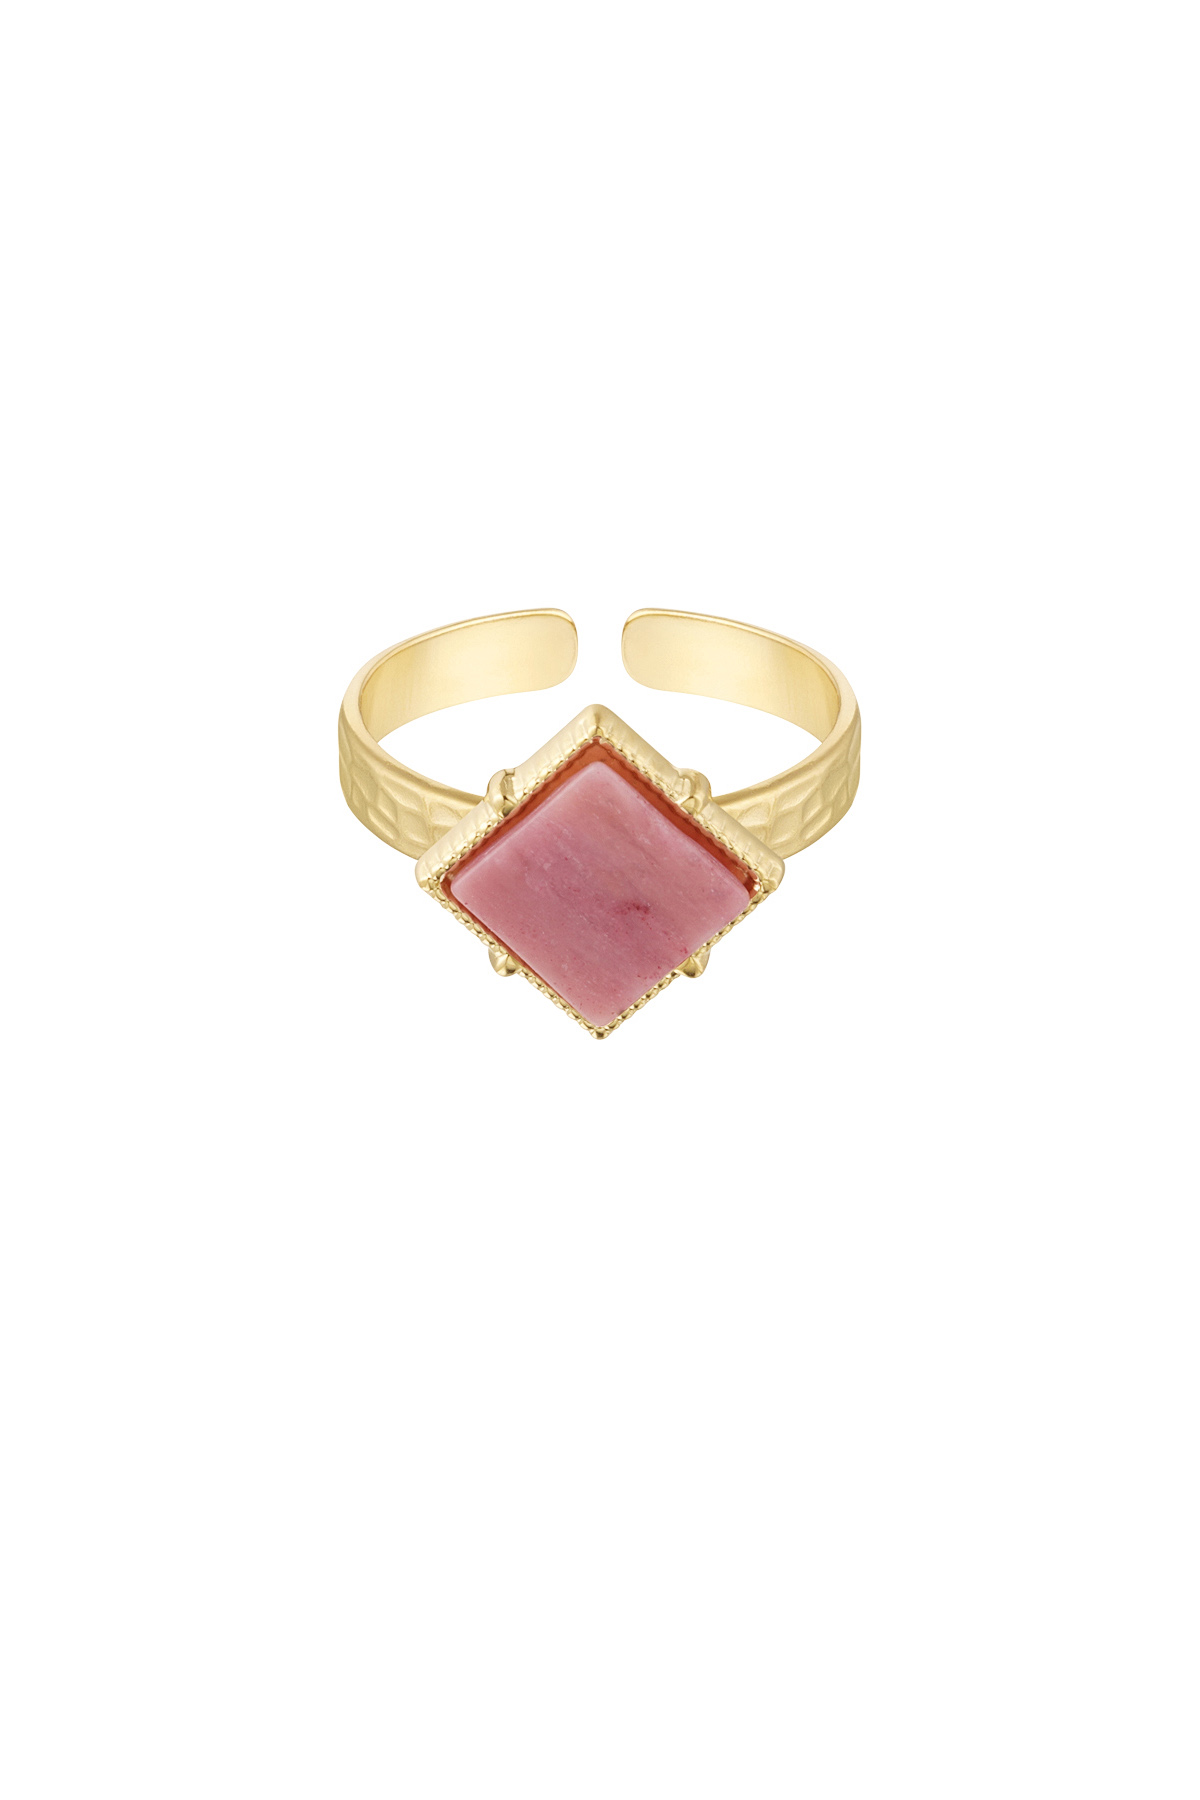 Ring ruit steen - goud/roze h5 